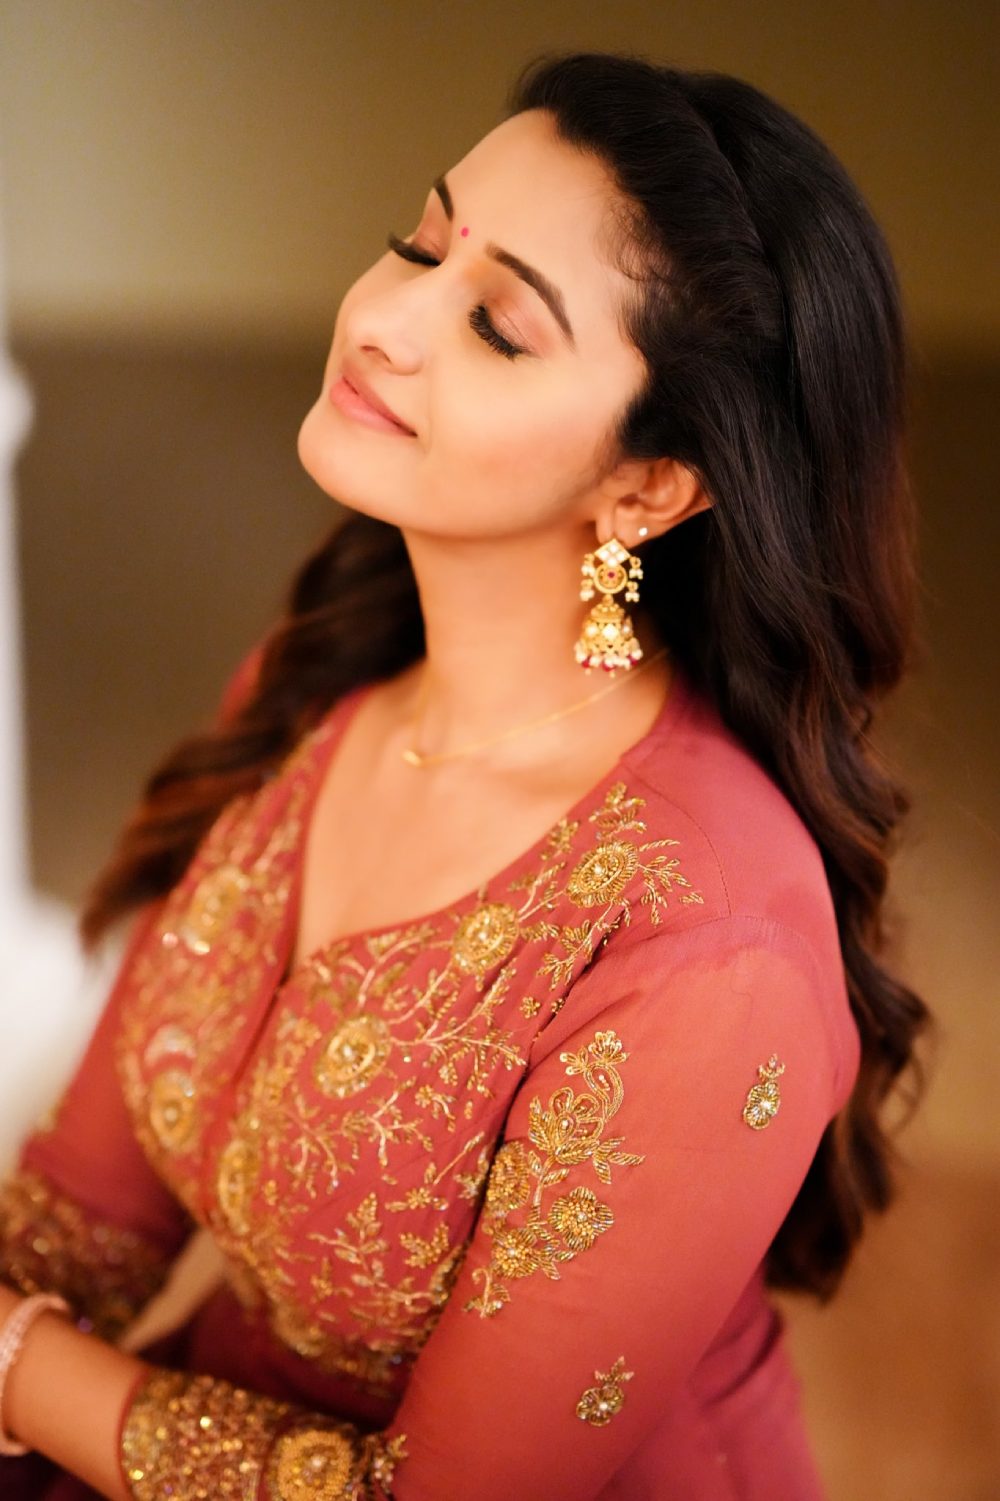 Priya Bhavani Shankar in traditional look.